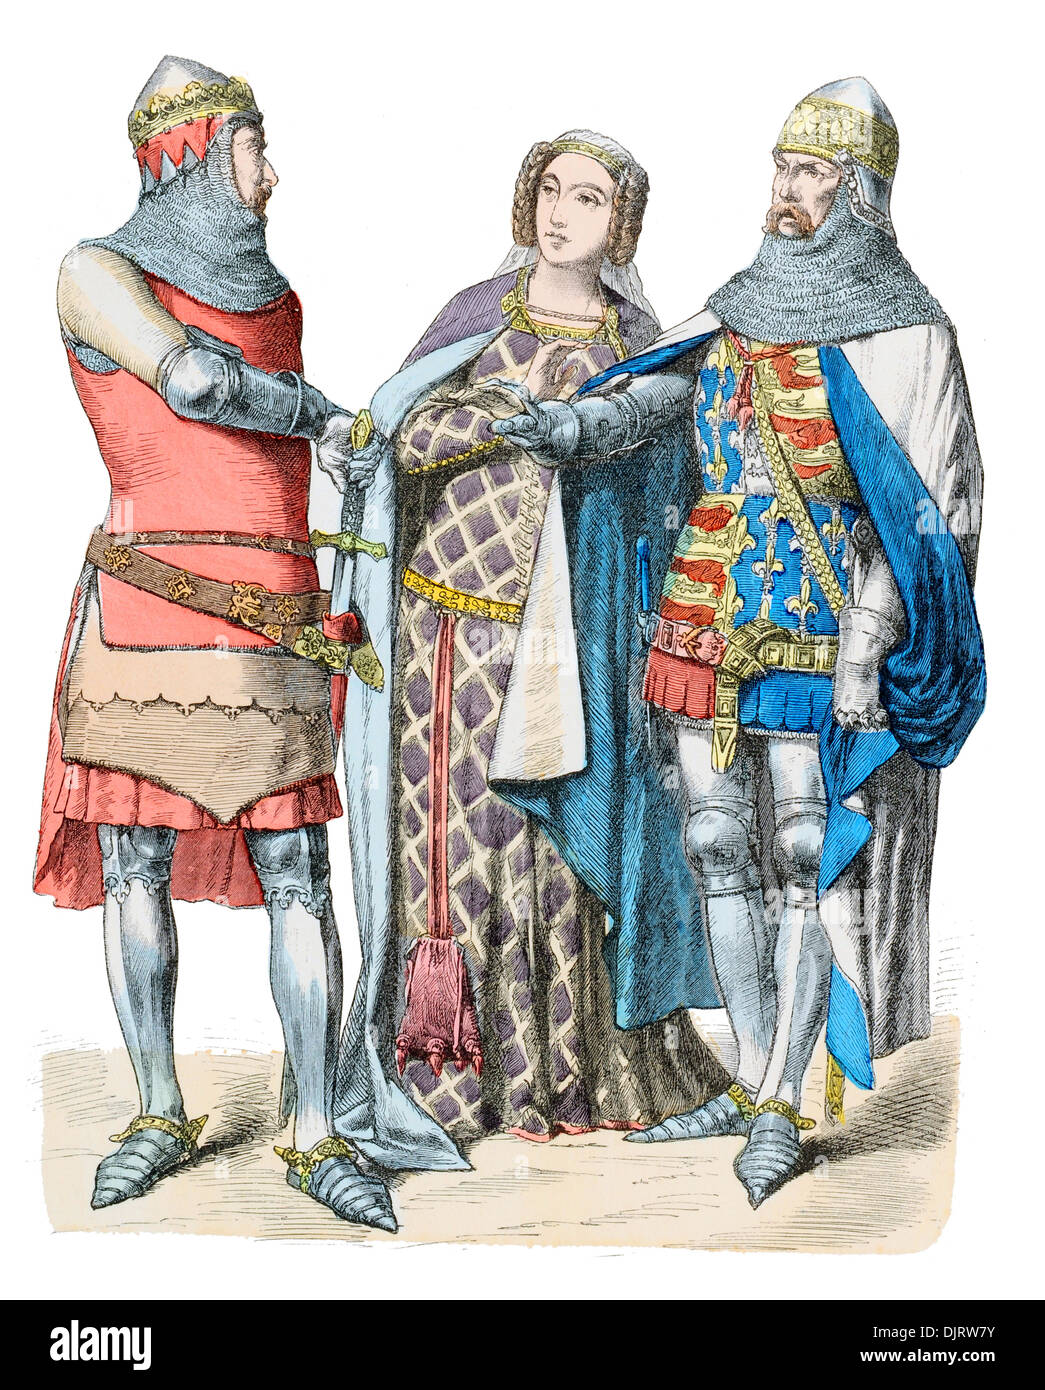 14th Century XIV 1300s English costume Stock Photo